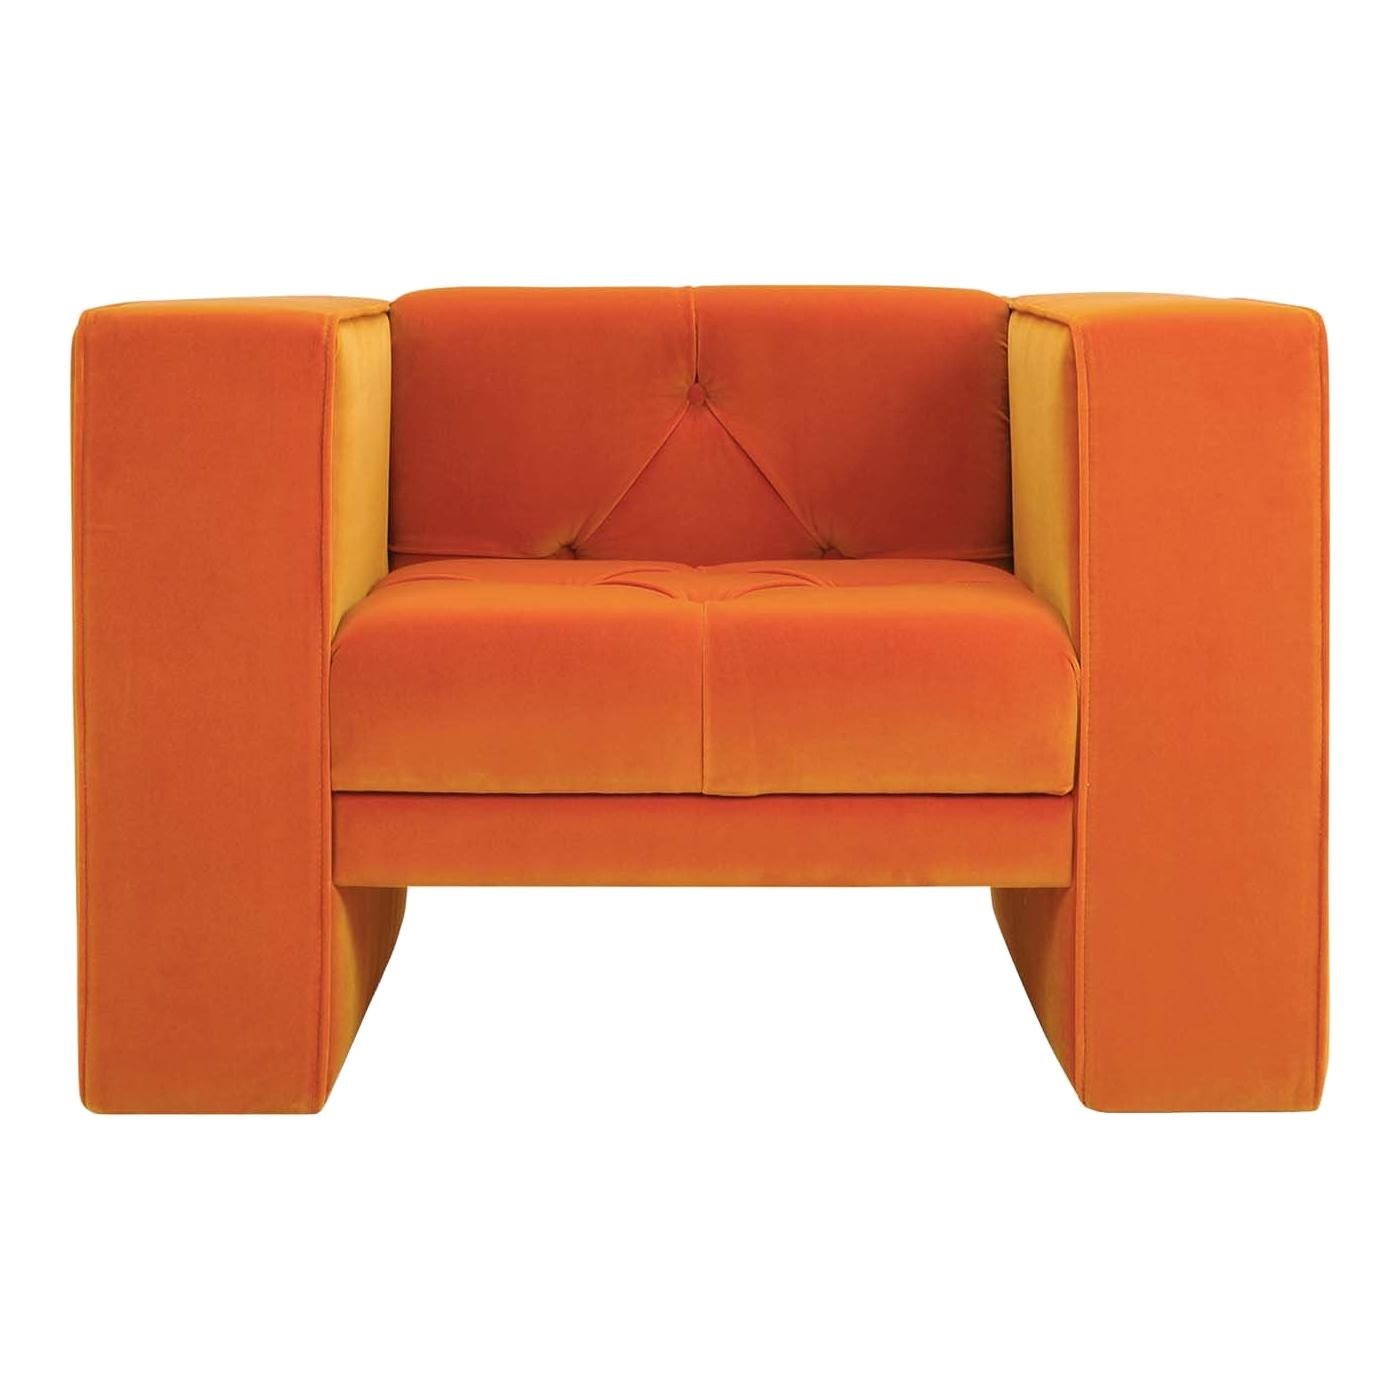 Tubby Orange Armchair